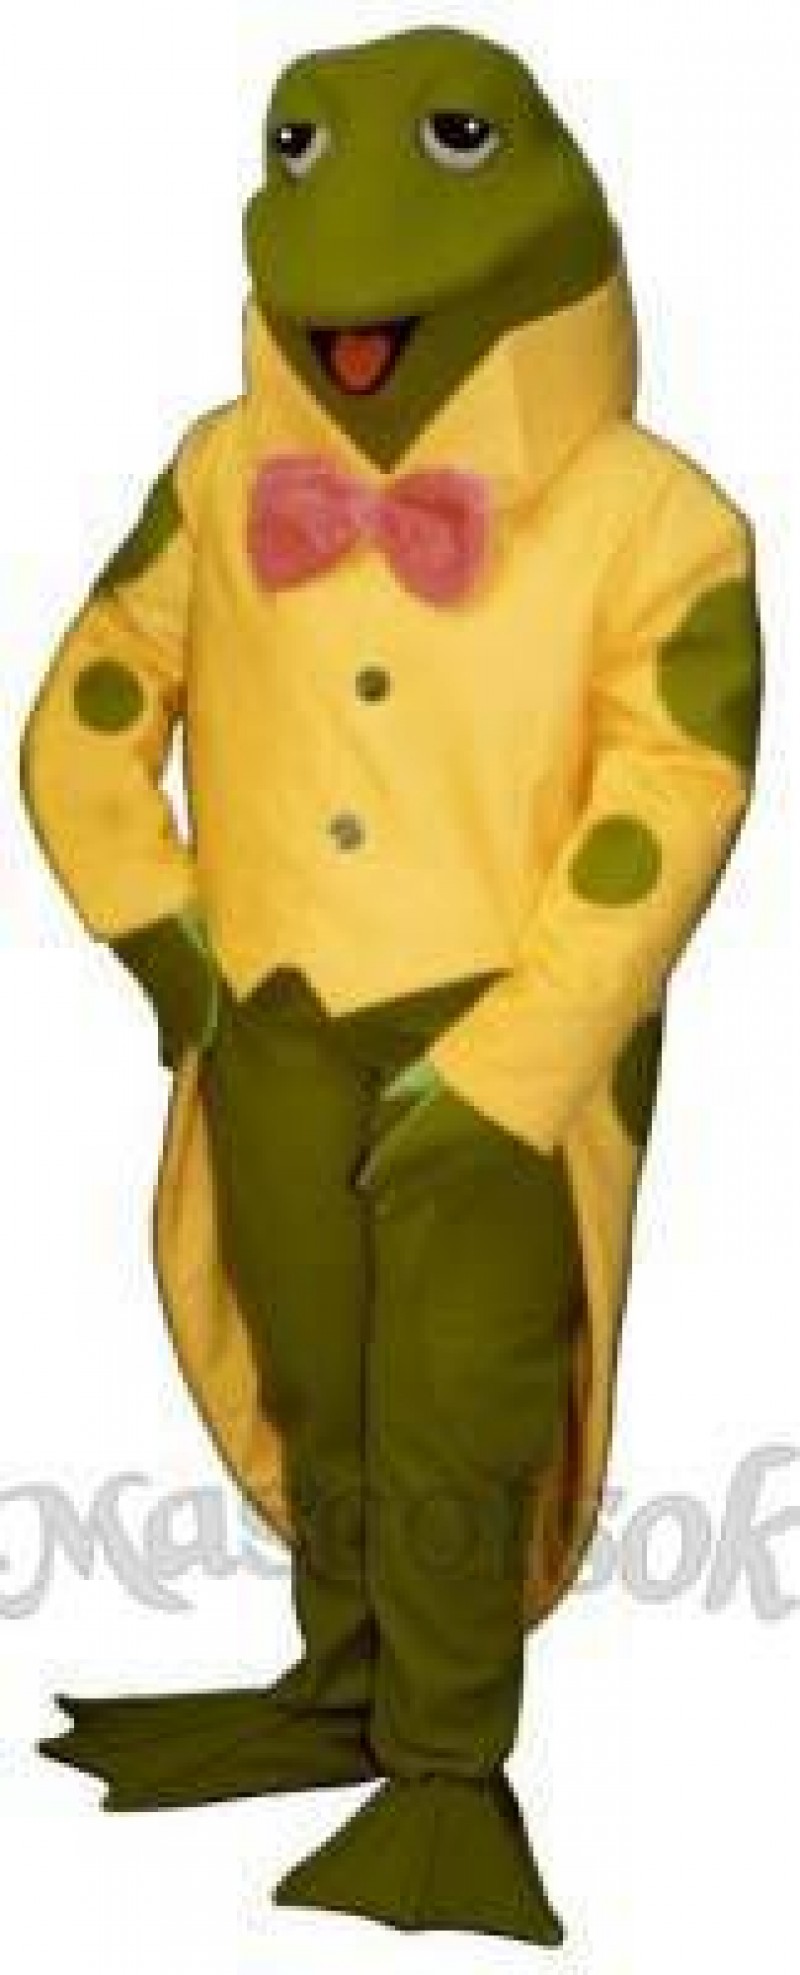 Mr. Ribbet Frog Mascot Costume